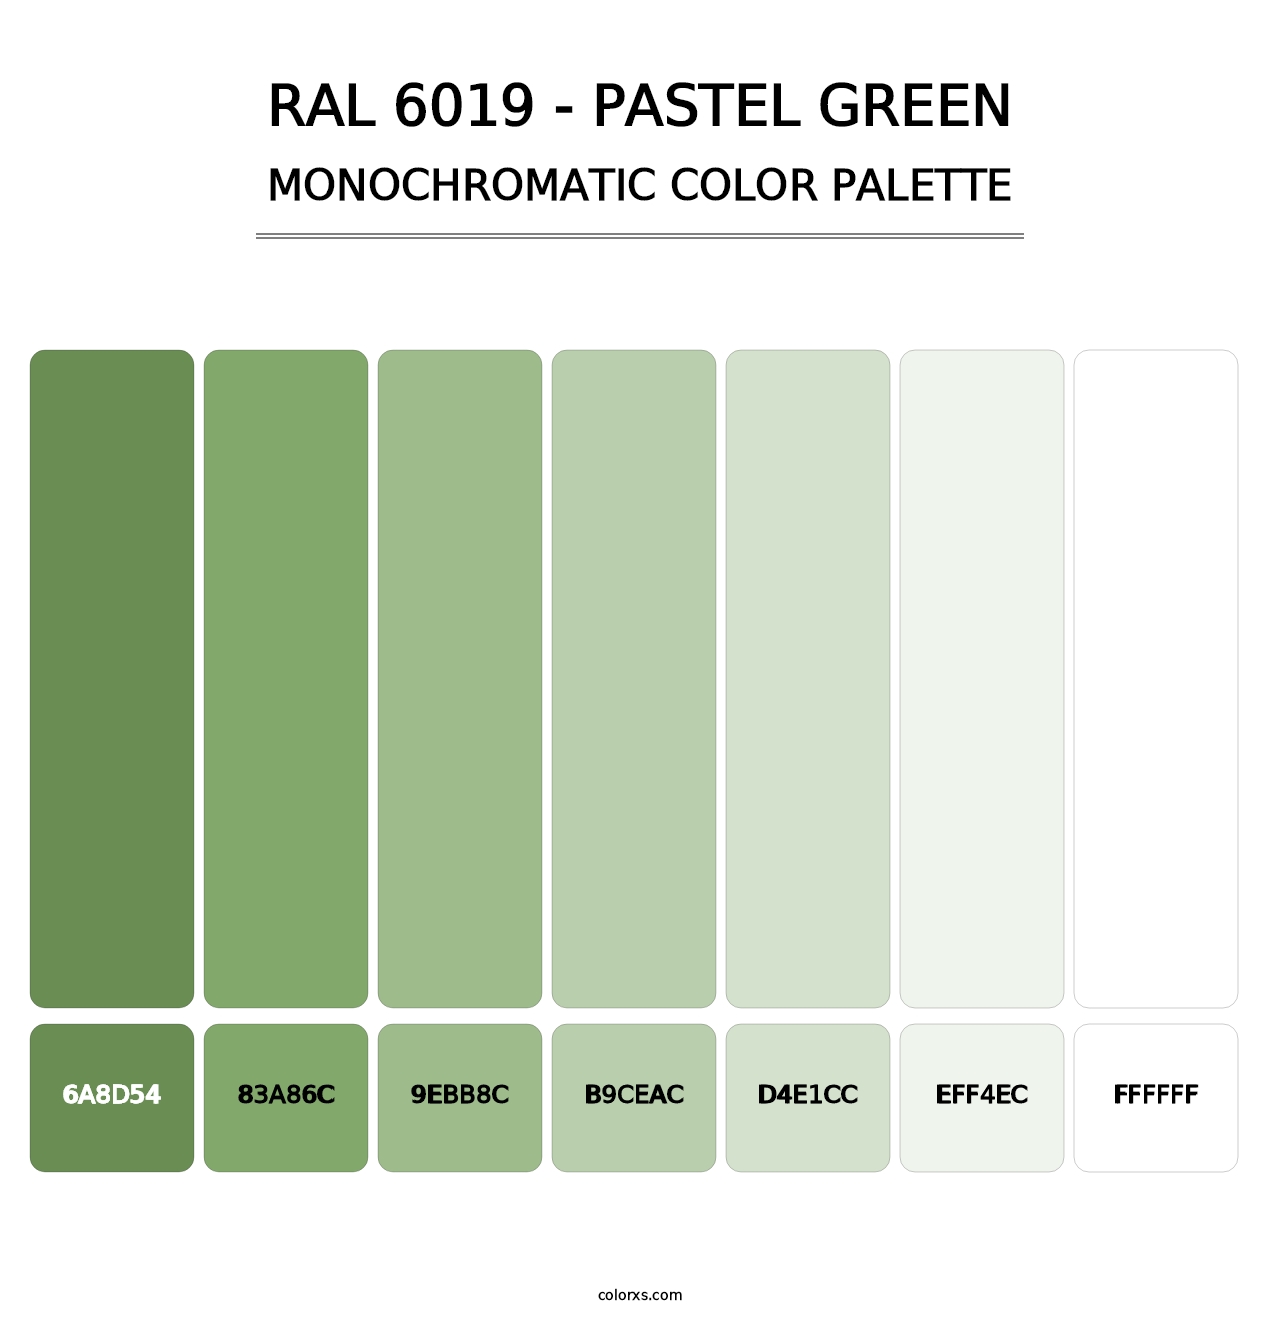 RAL 6019 - Pastel Green - Monochromatic Color Palette